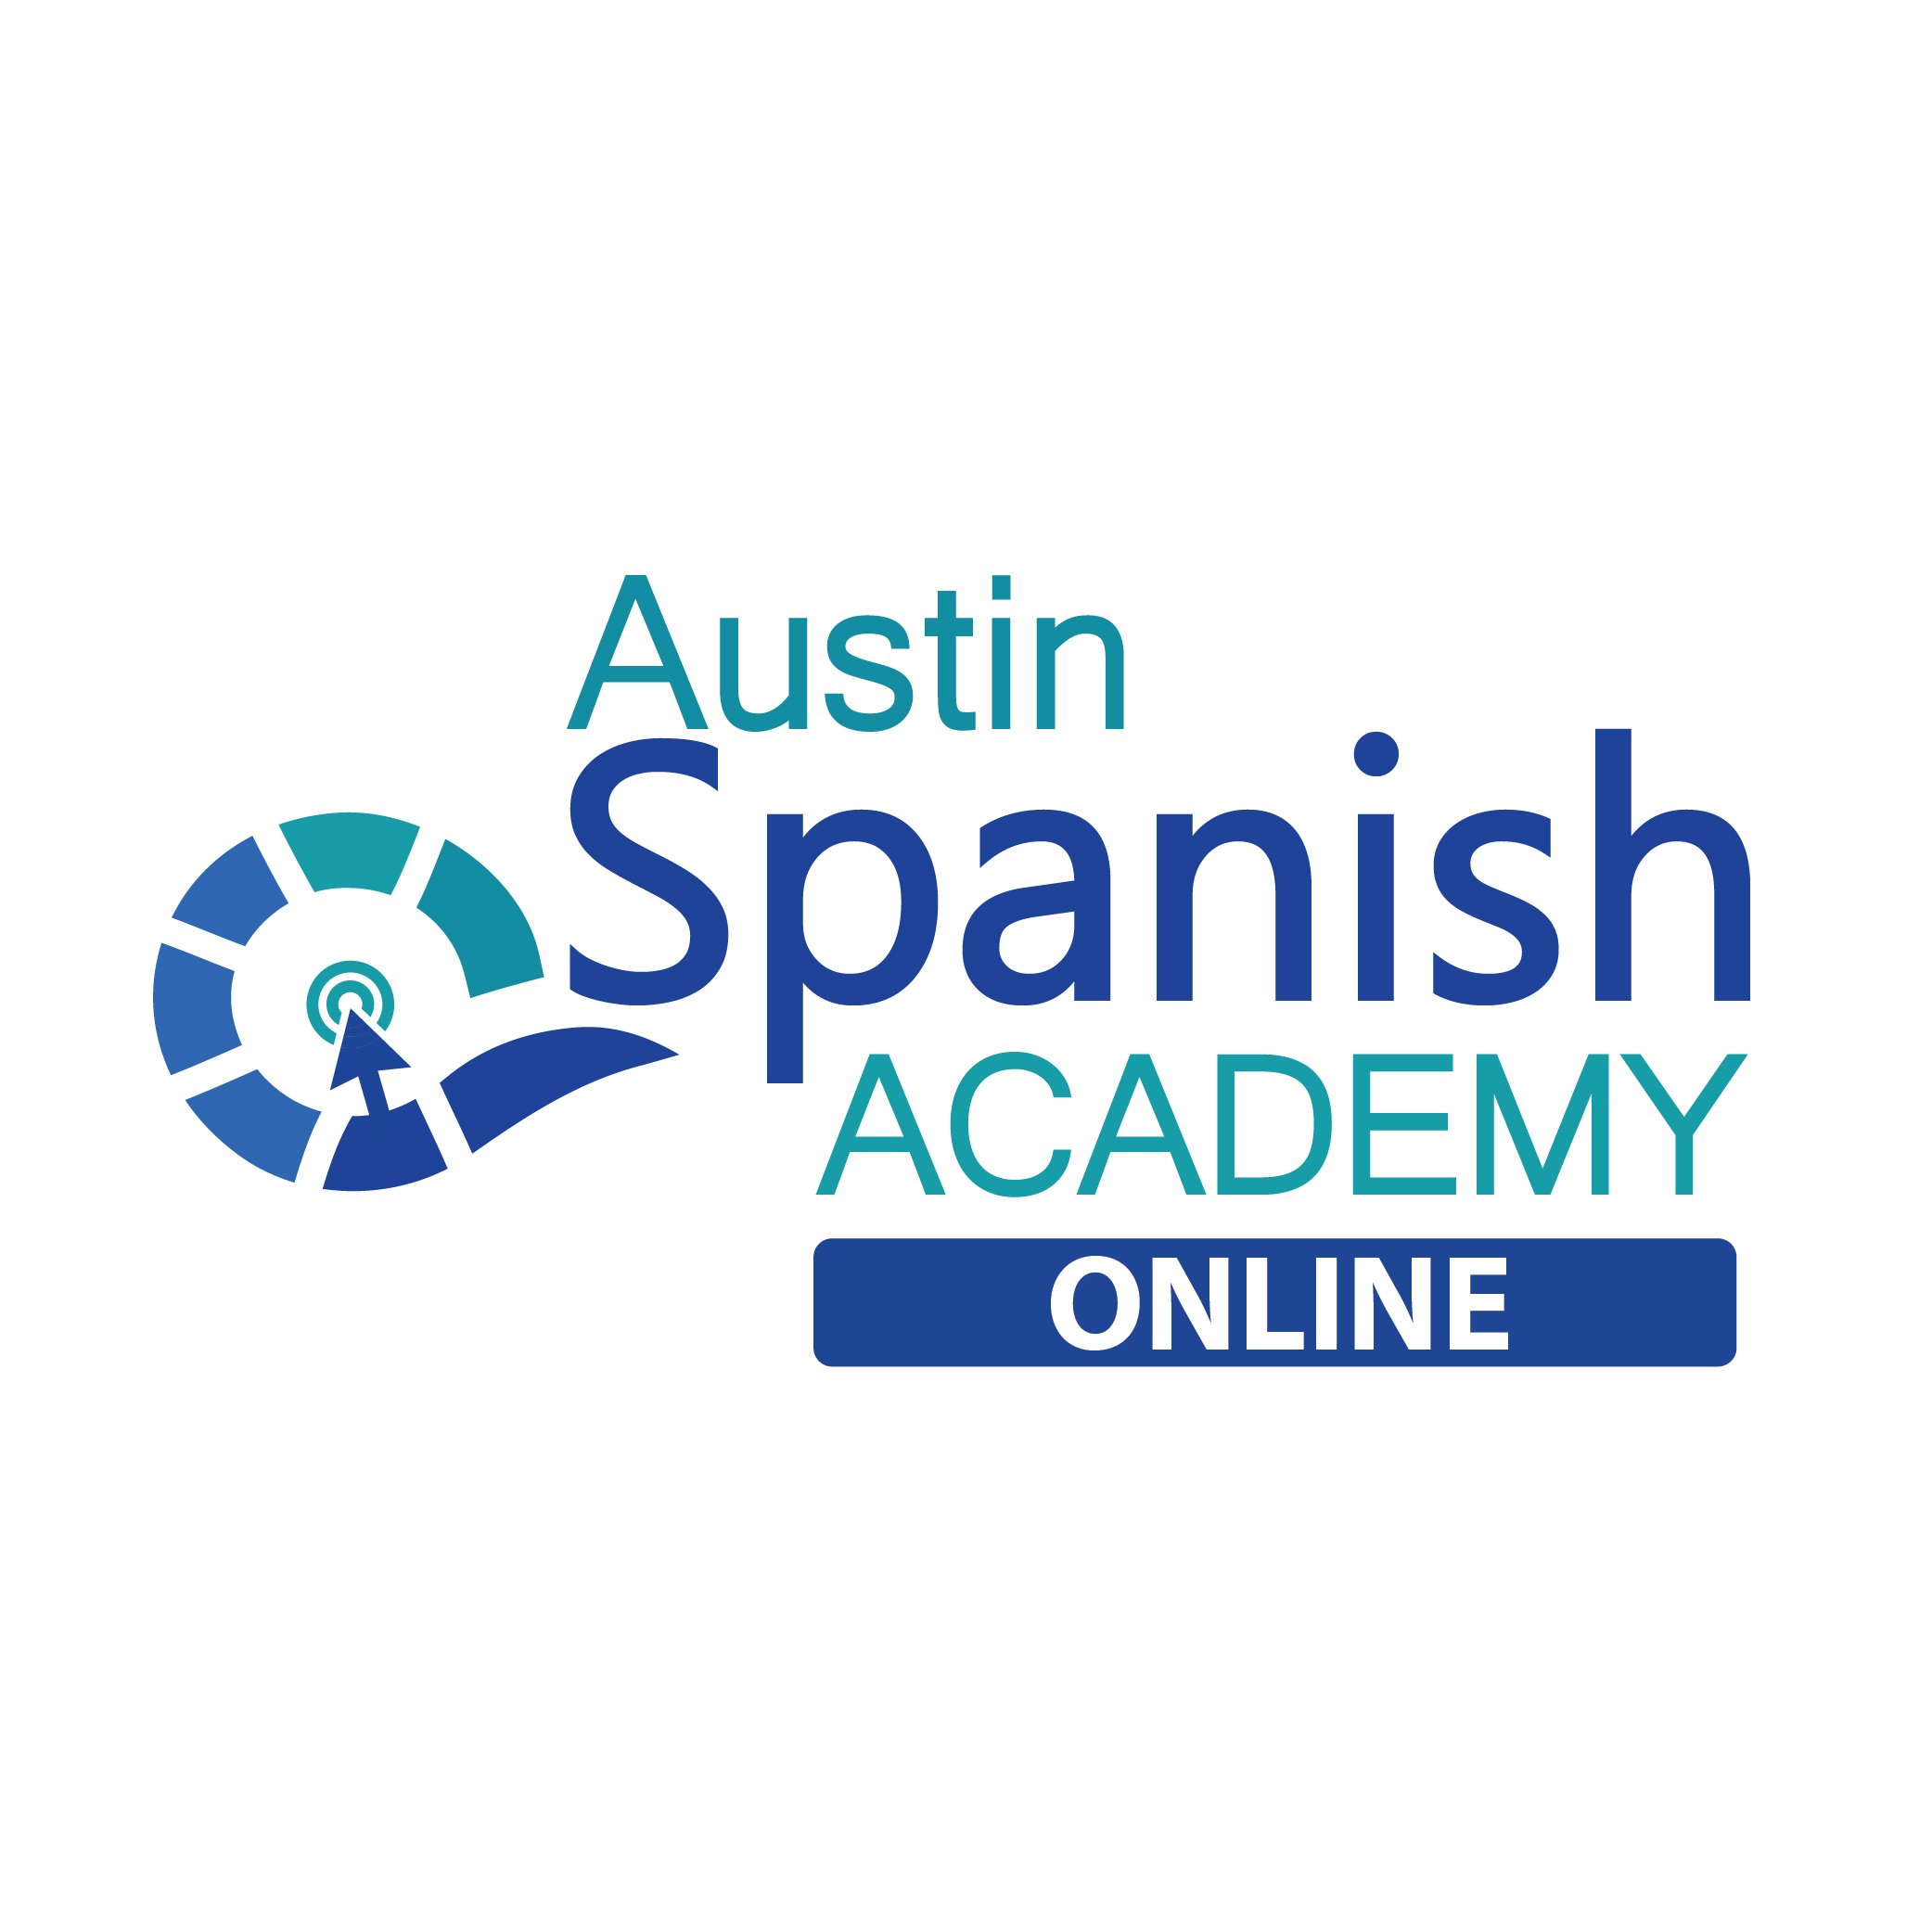 Austin Spanish Academy logo